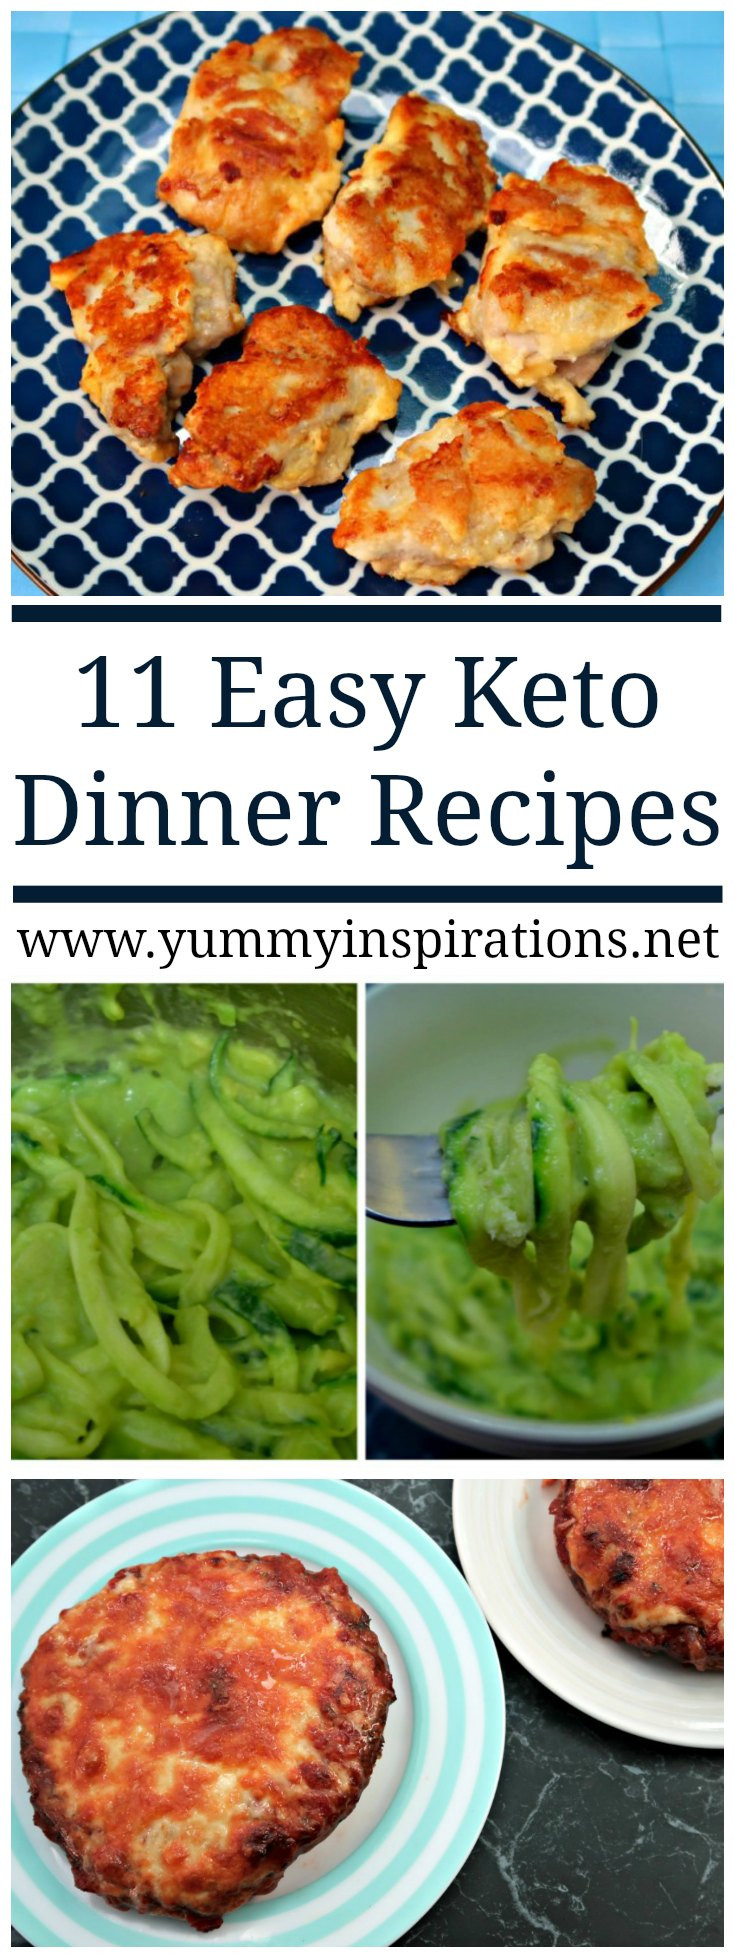 Easy Keto Dinner
 11 Easy Keto Dinner Recipes Quick Low Carb Ketogenic